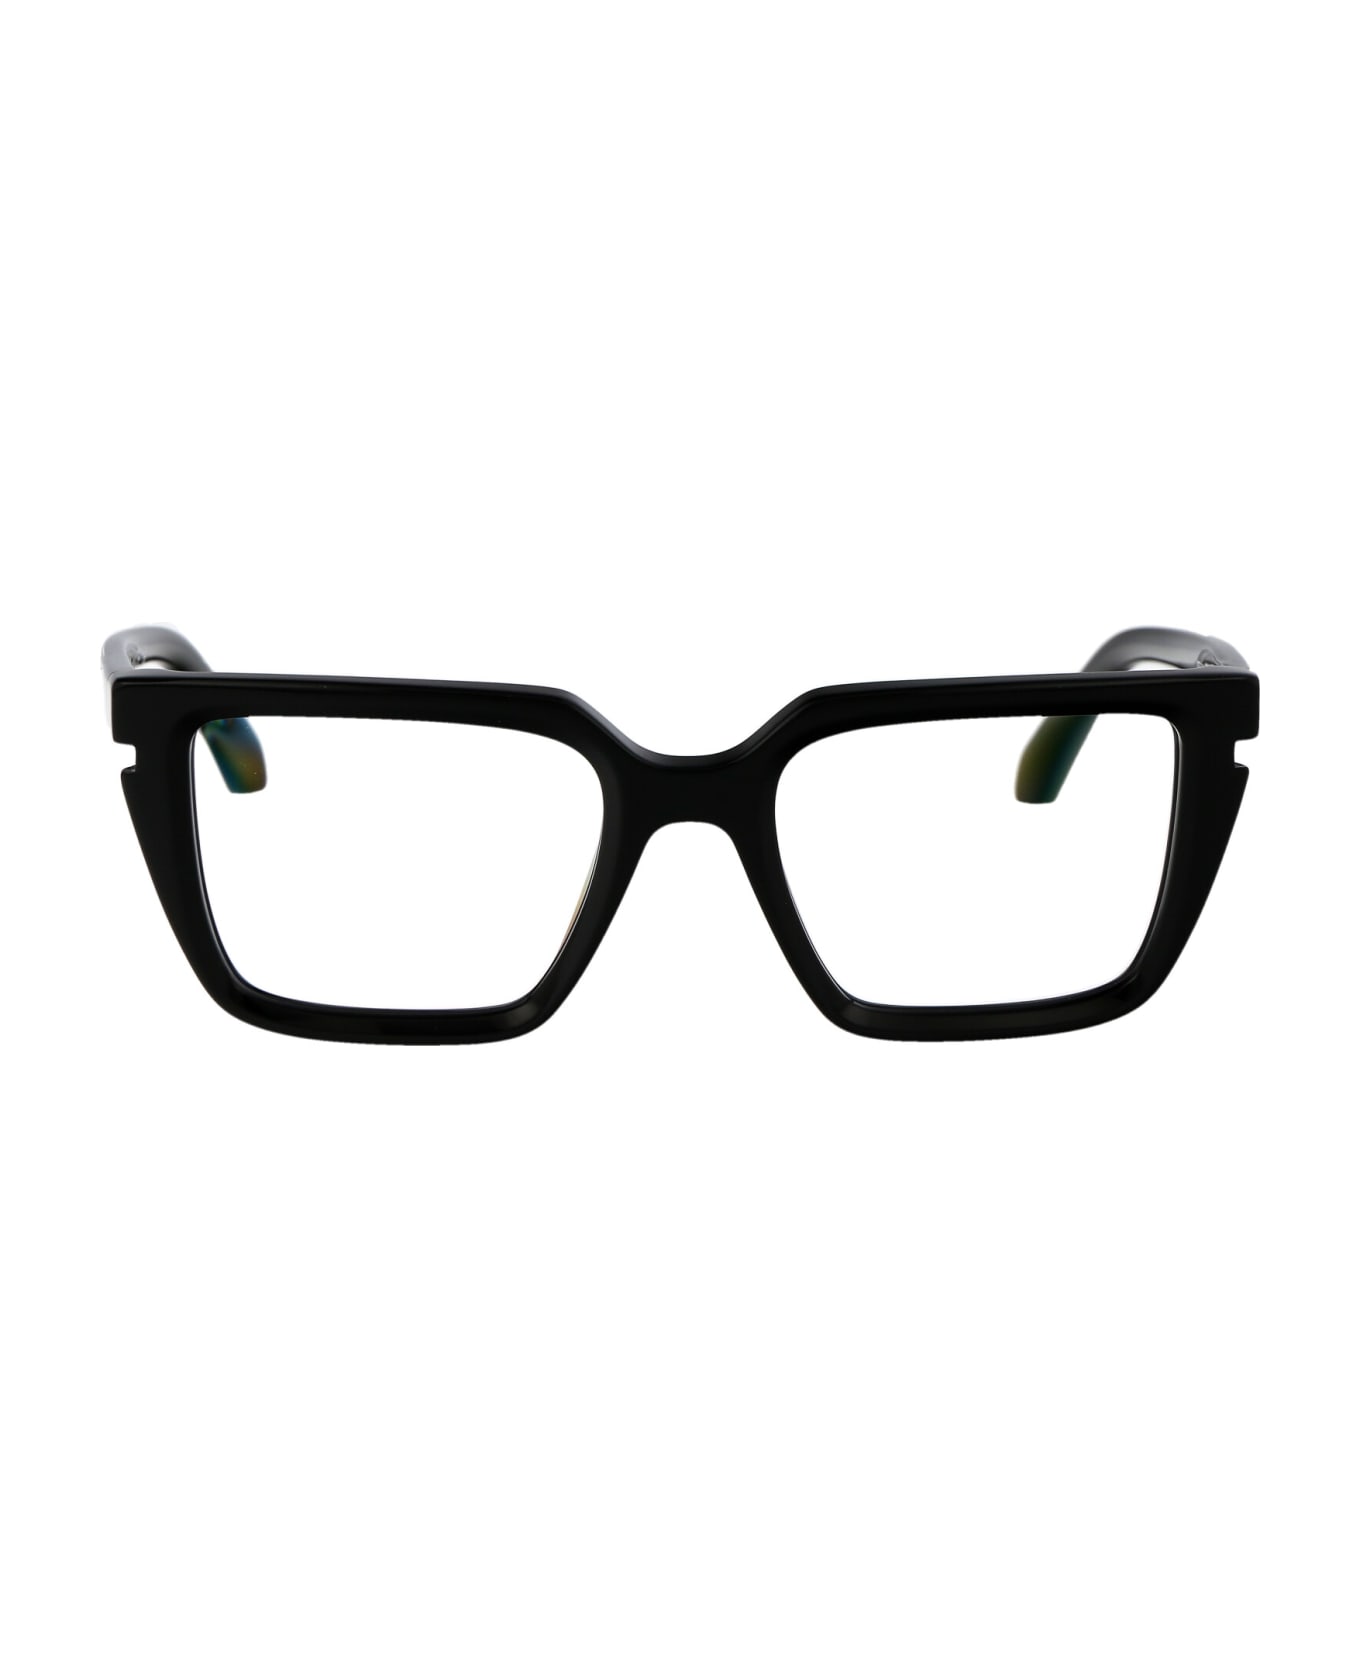 Off-White Optical Style 52 Glasses - 1000 BLACK